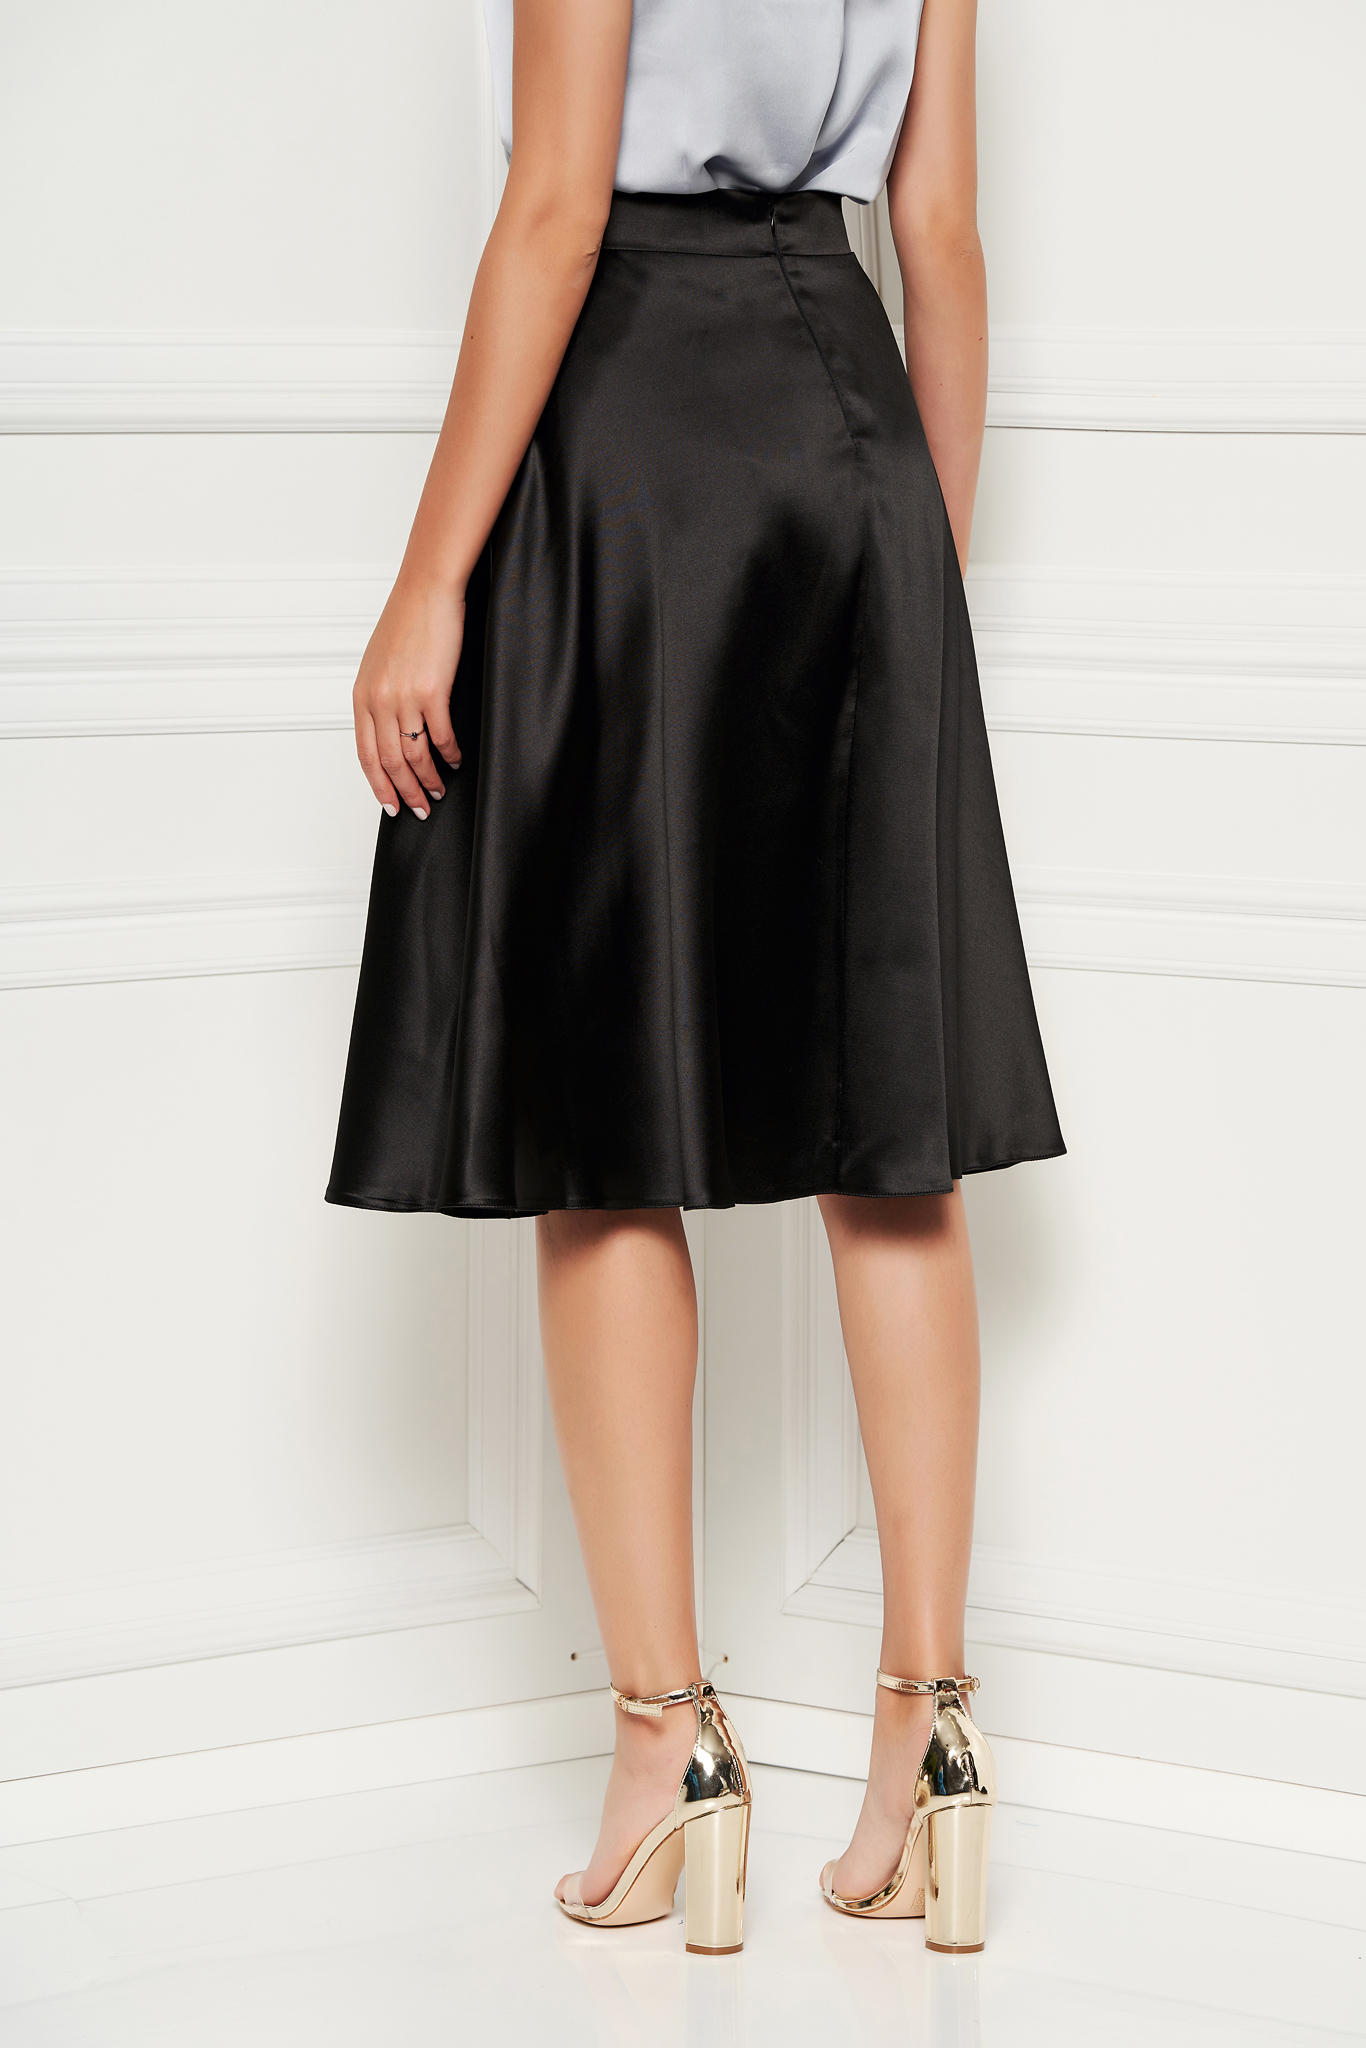 Starshiners Black Elegant High Waisted Cloche Skirt From Satin 8772